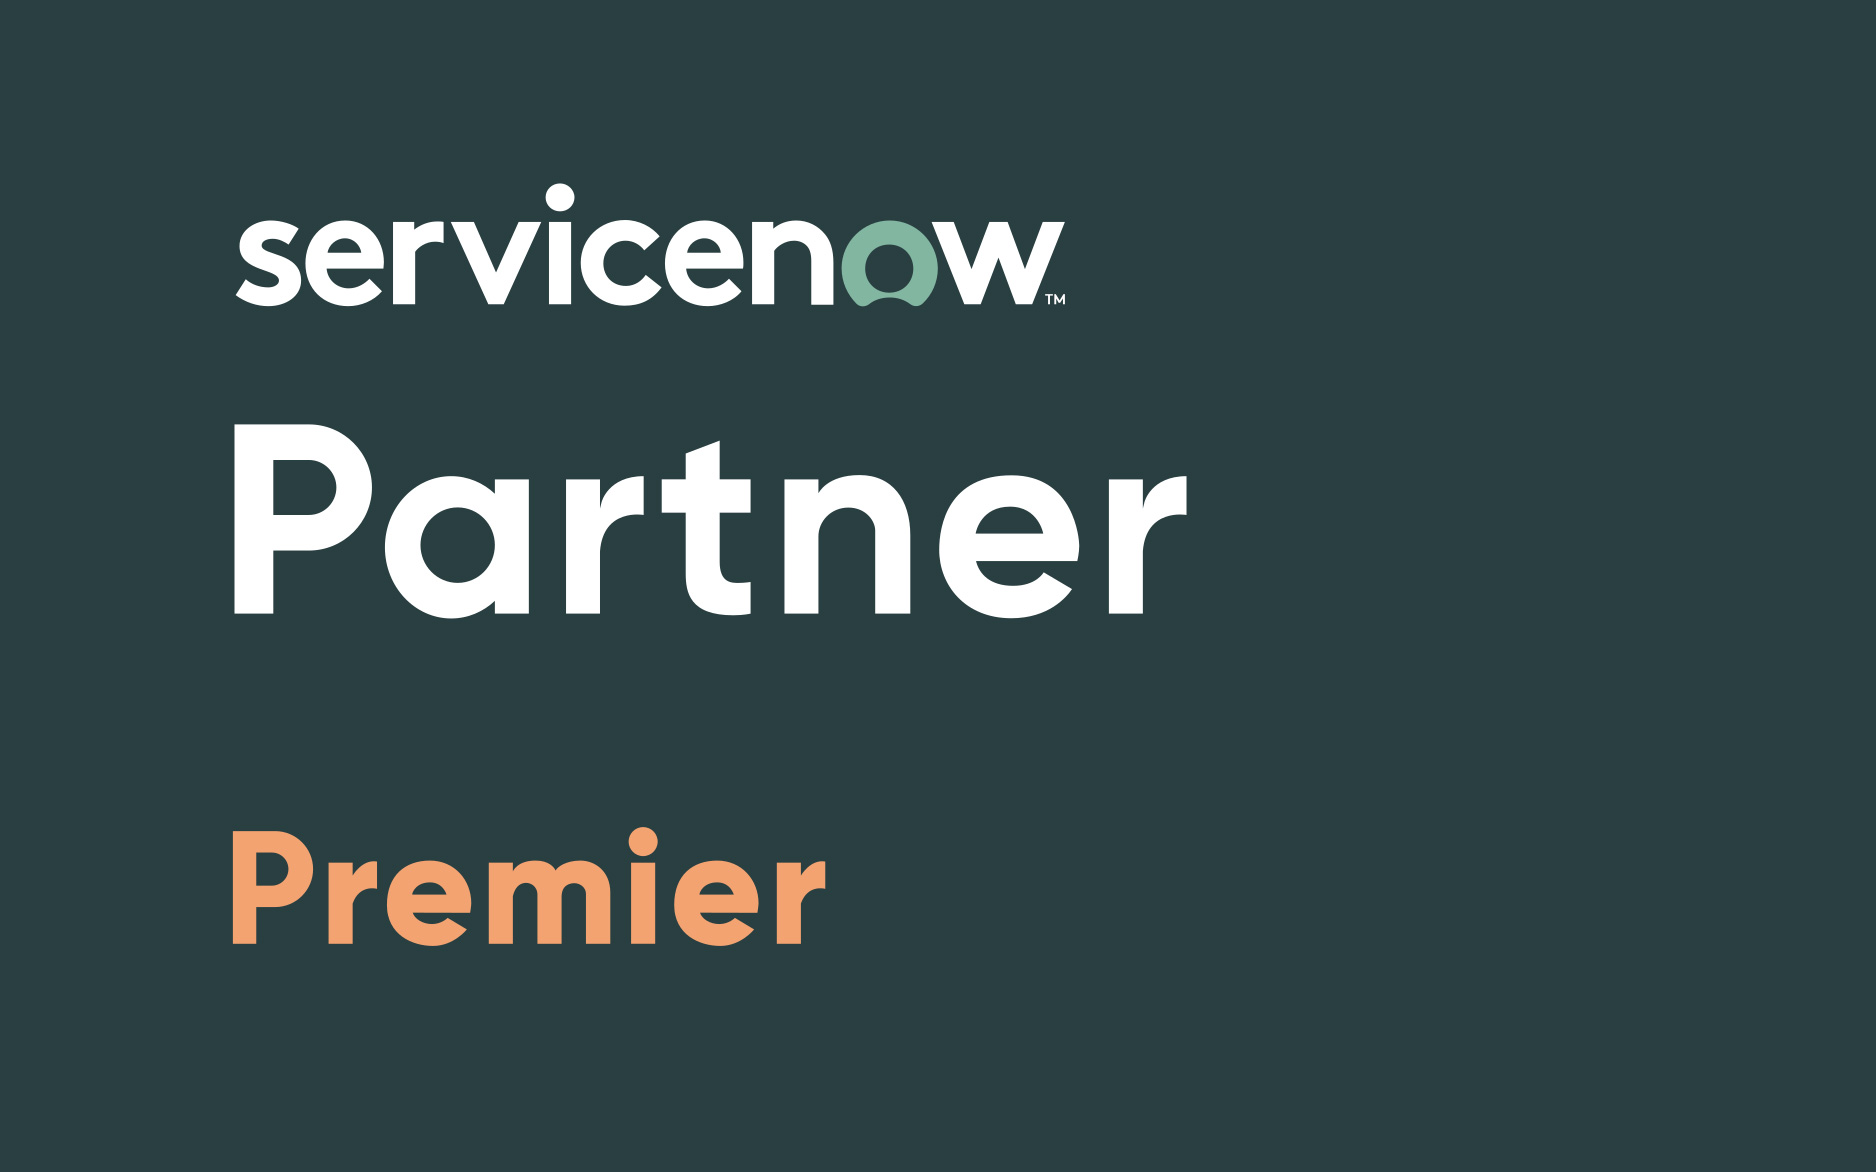 Partner Premier Servicenow